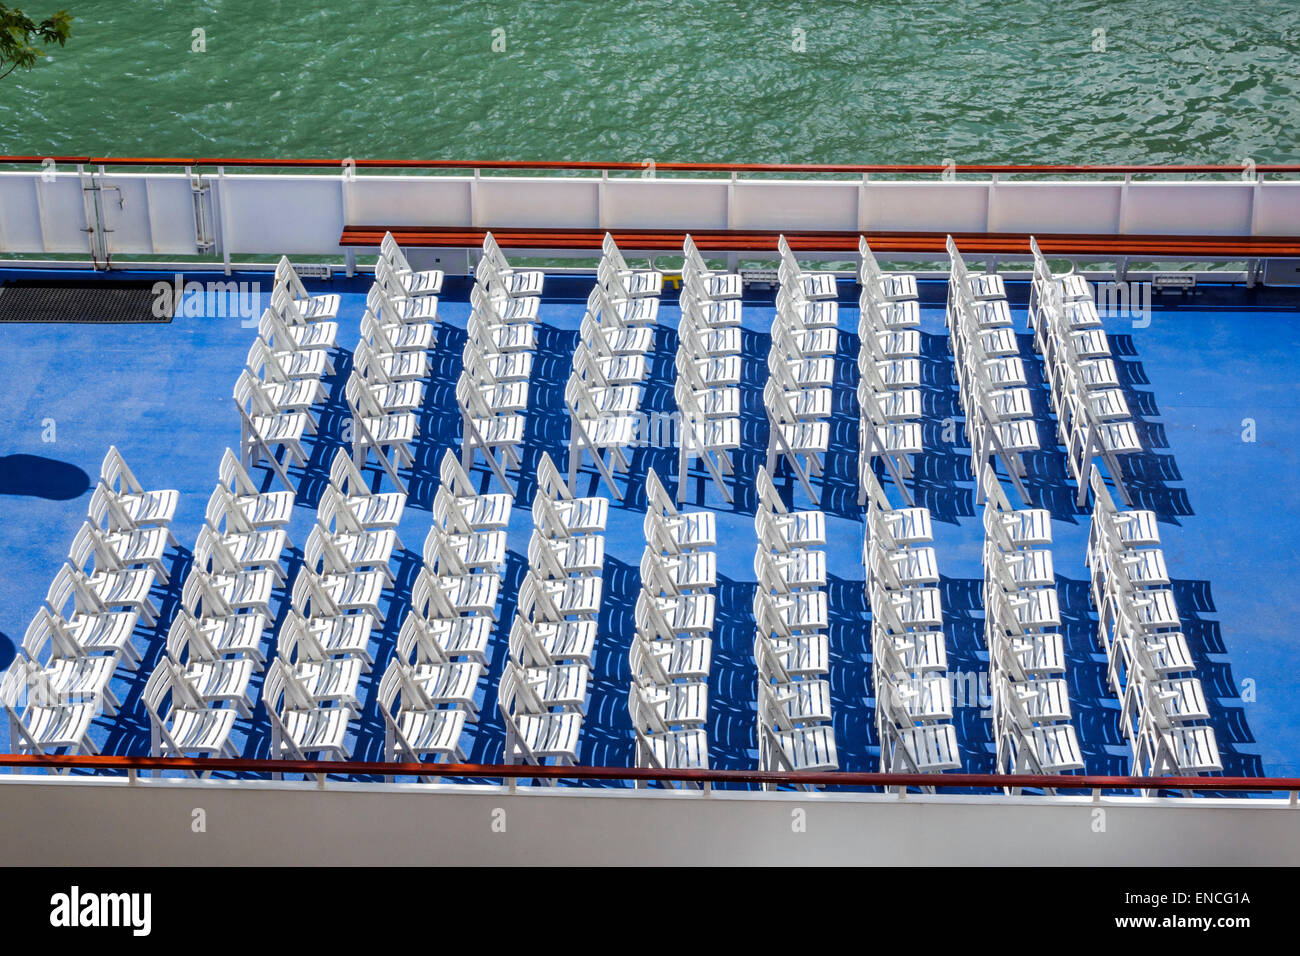 Chicago Illinois,Chicago River,barco,tour boat,cubierta superior,sillas,filas,organizadas,alinear,agua,azul,blanco,vacío,IL140908023 Foto de stock